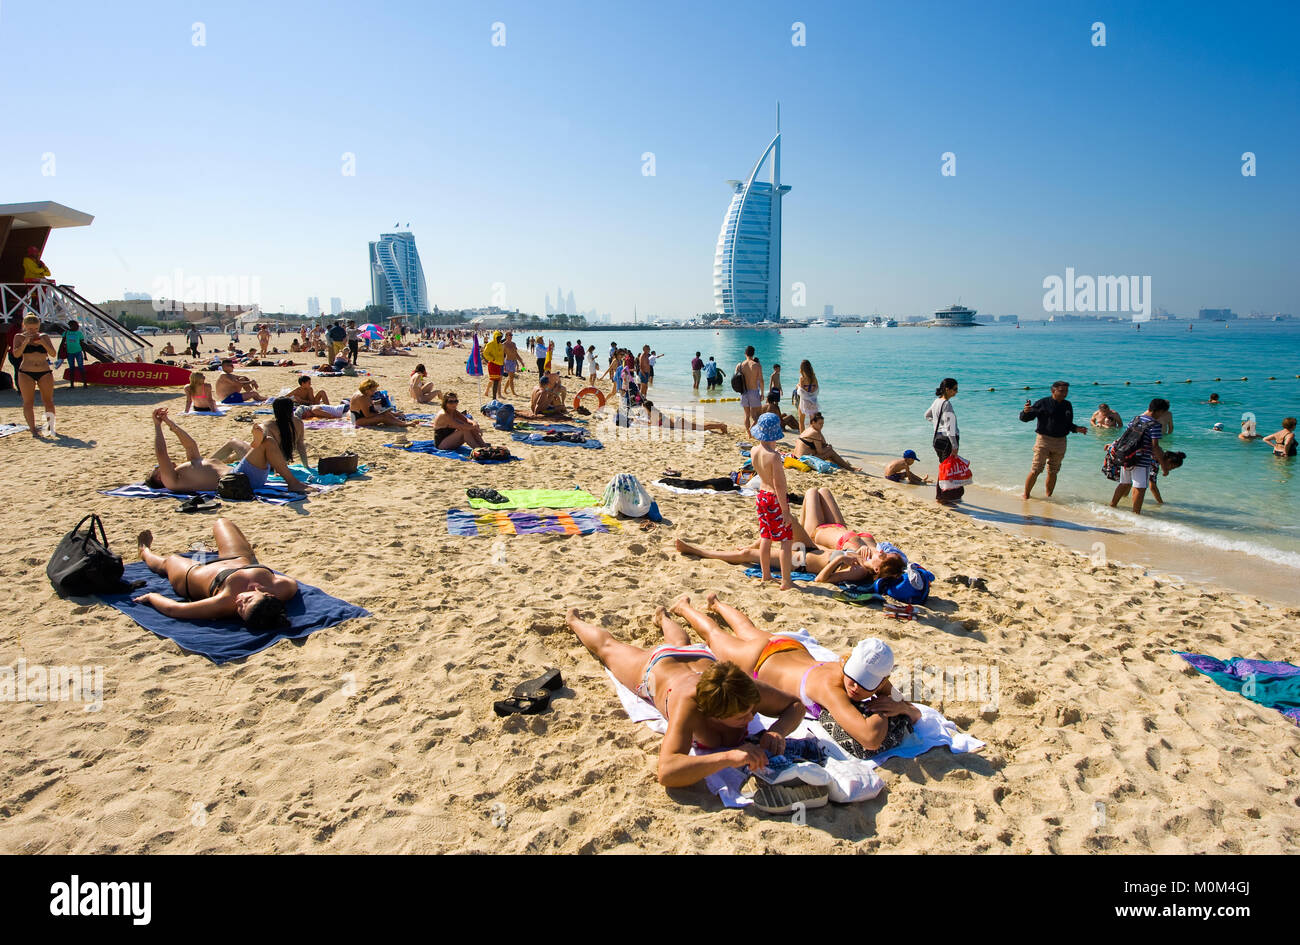 DUBAI, UNITED ARAB EMIRATES - JAN 02, 2018: Public beach of Dubai near the Burj Al Arab hotel. Stock Photo